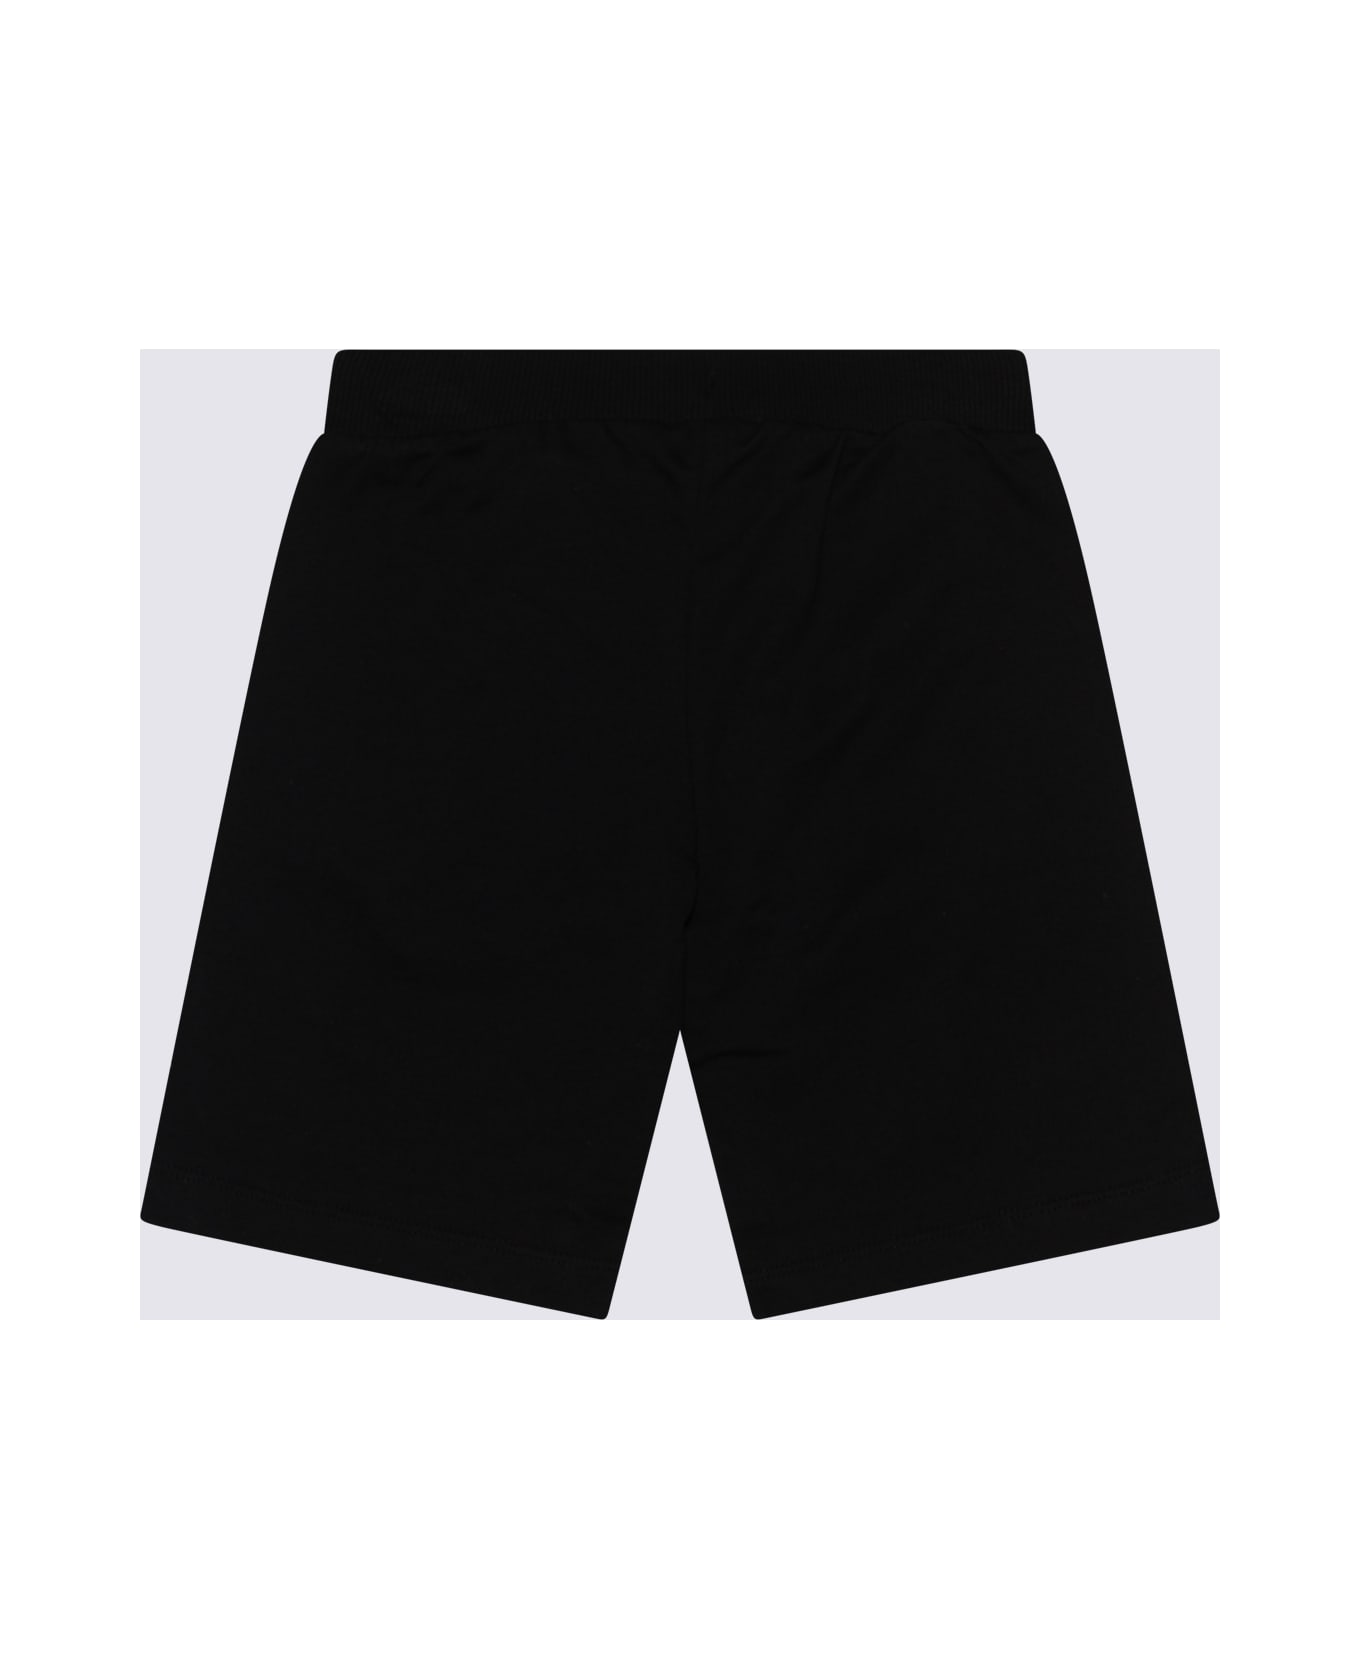 Moschino Black Cotton Shorts - Black